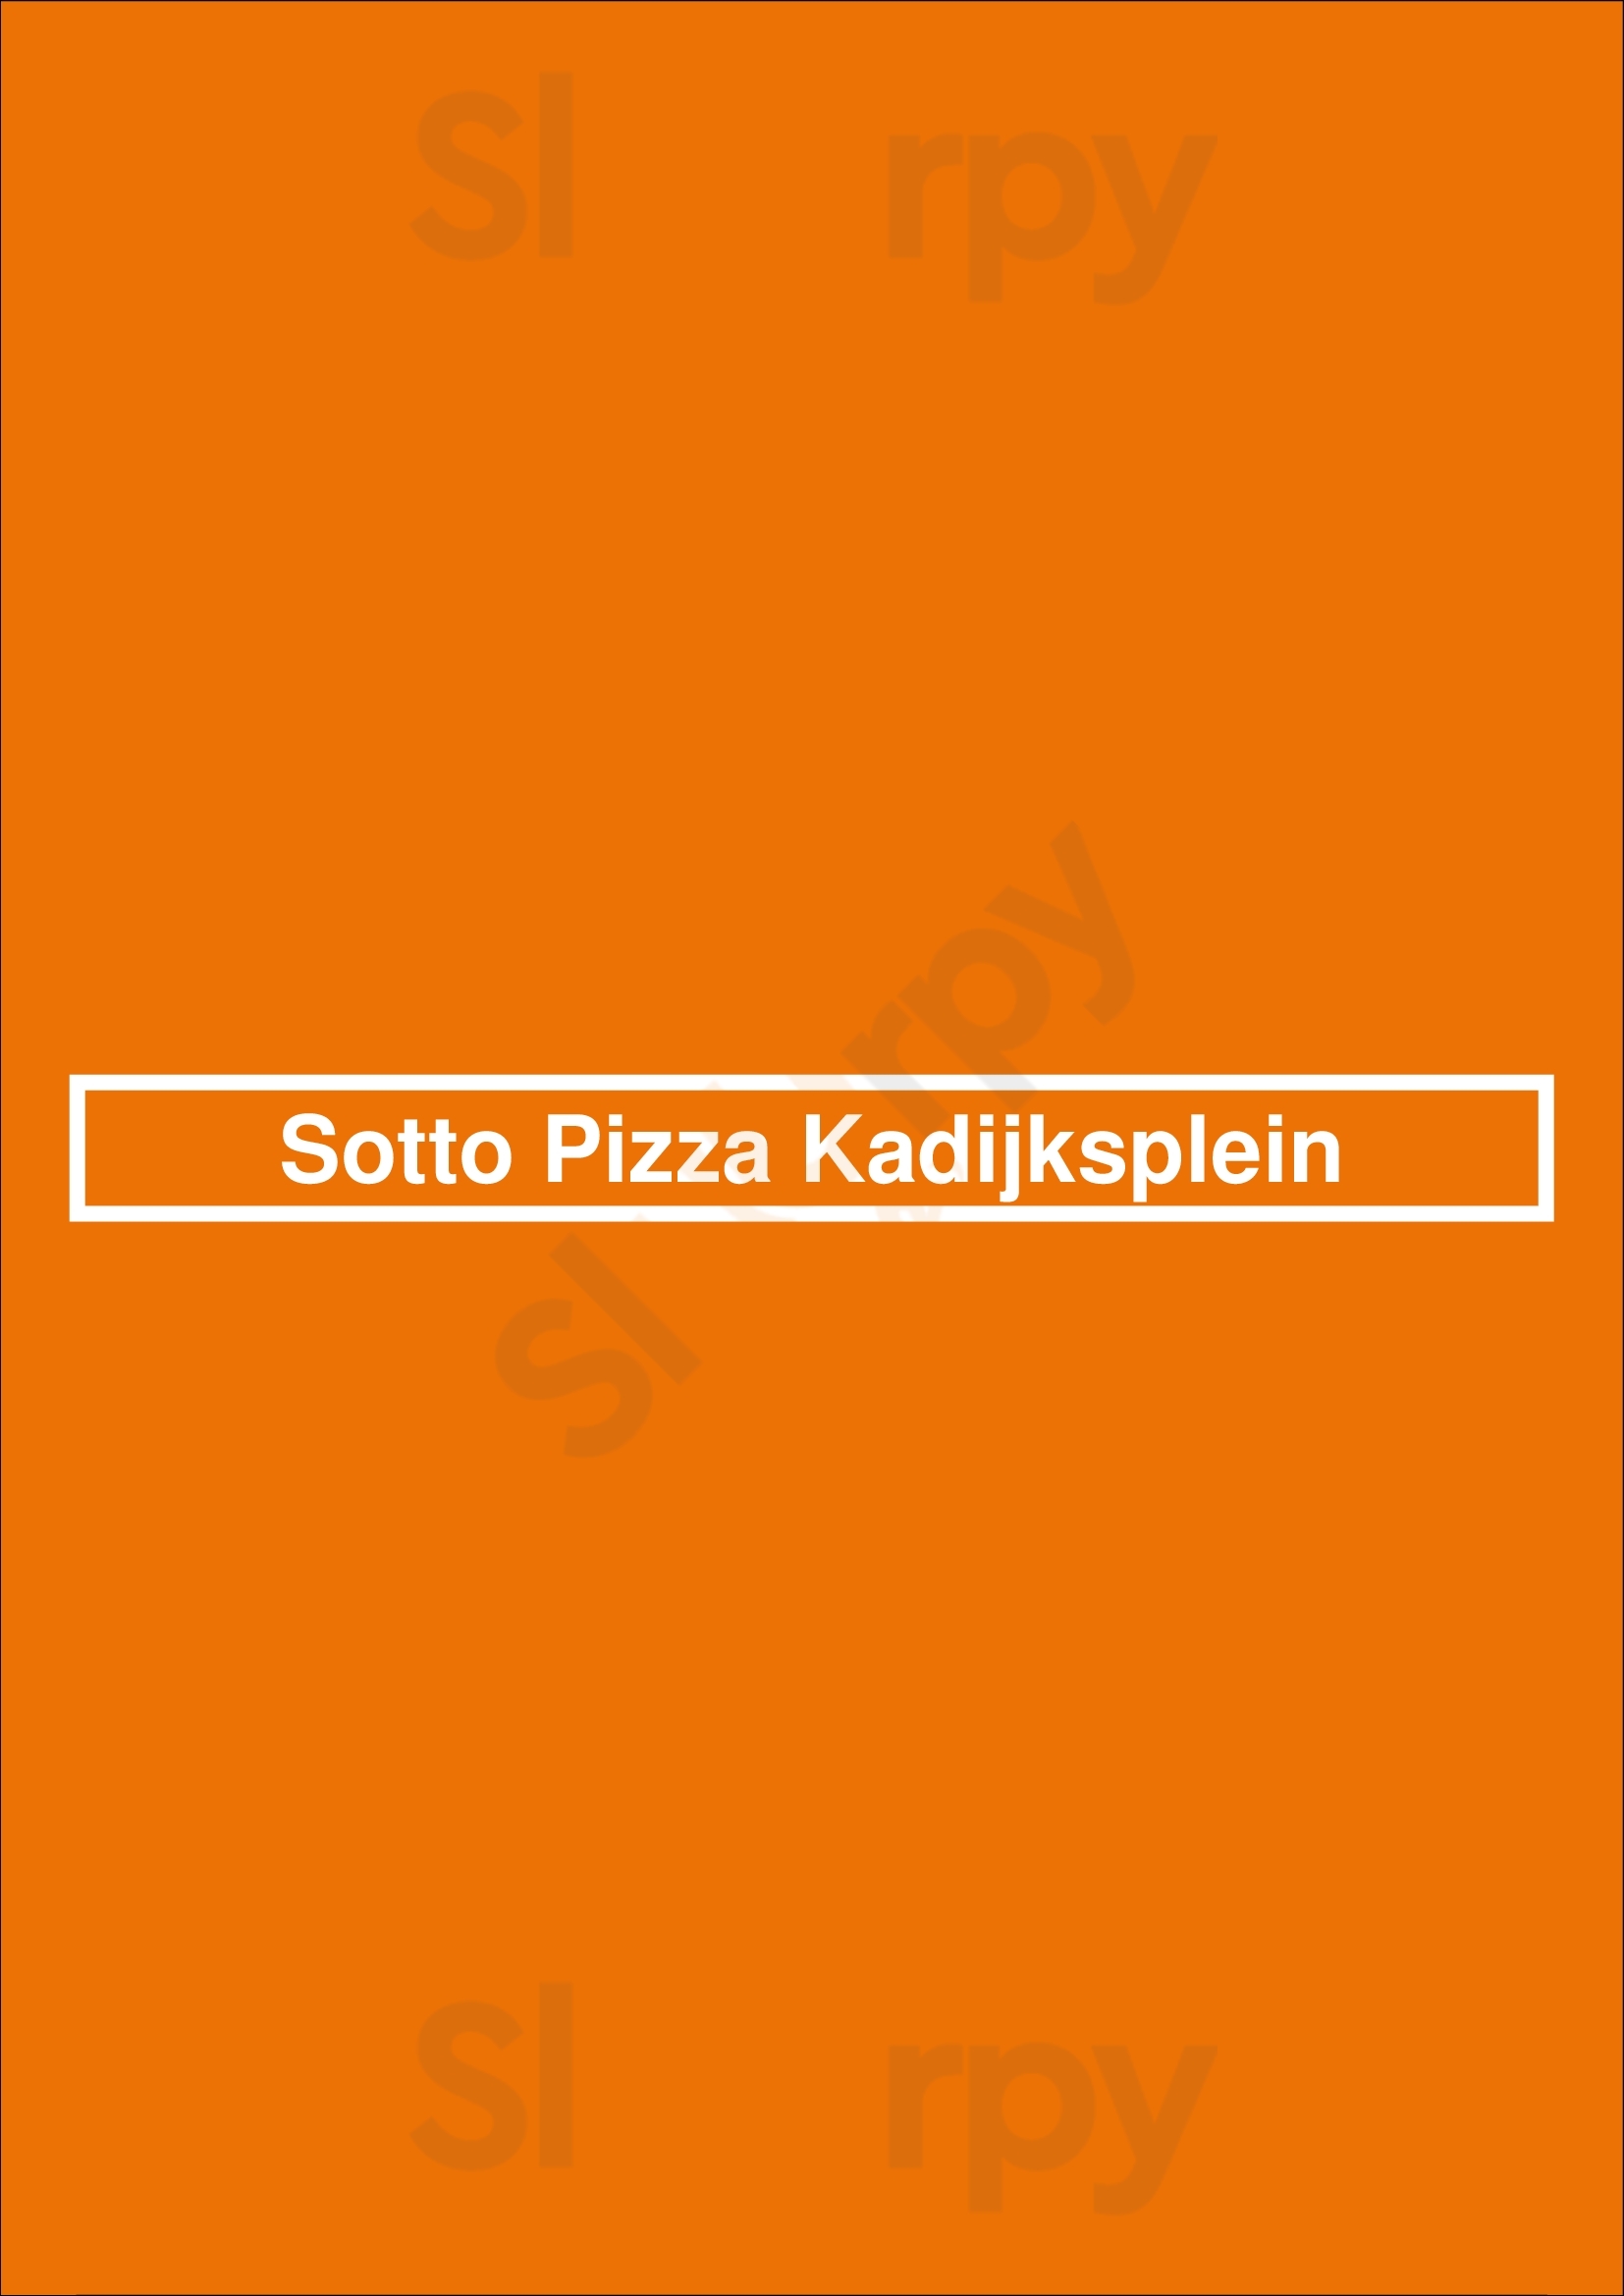 Sotto Pizza Kadijksplein Amsterdam Menu - 1